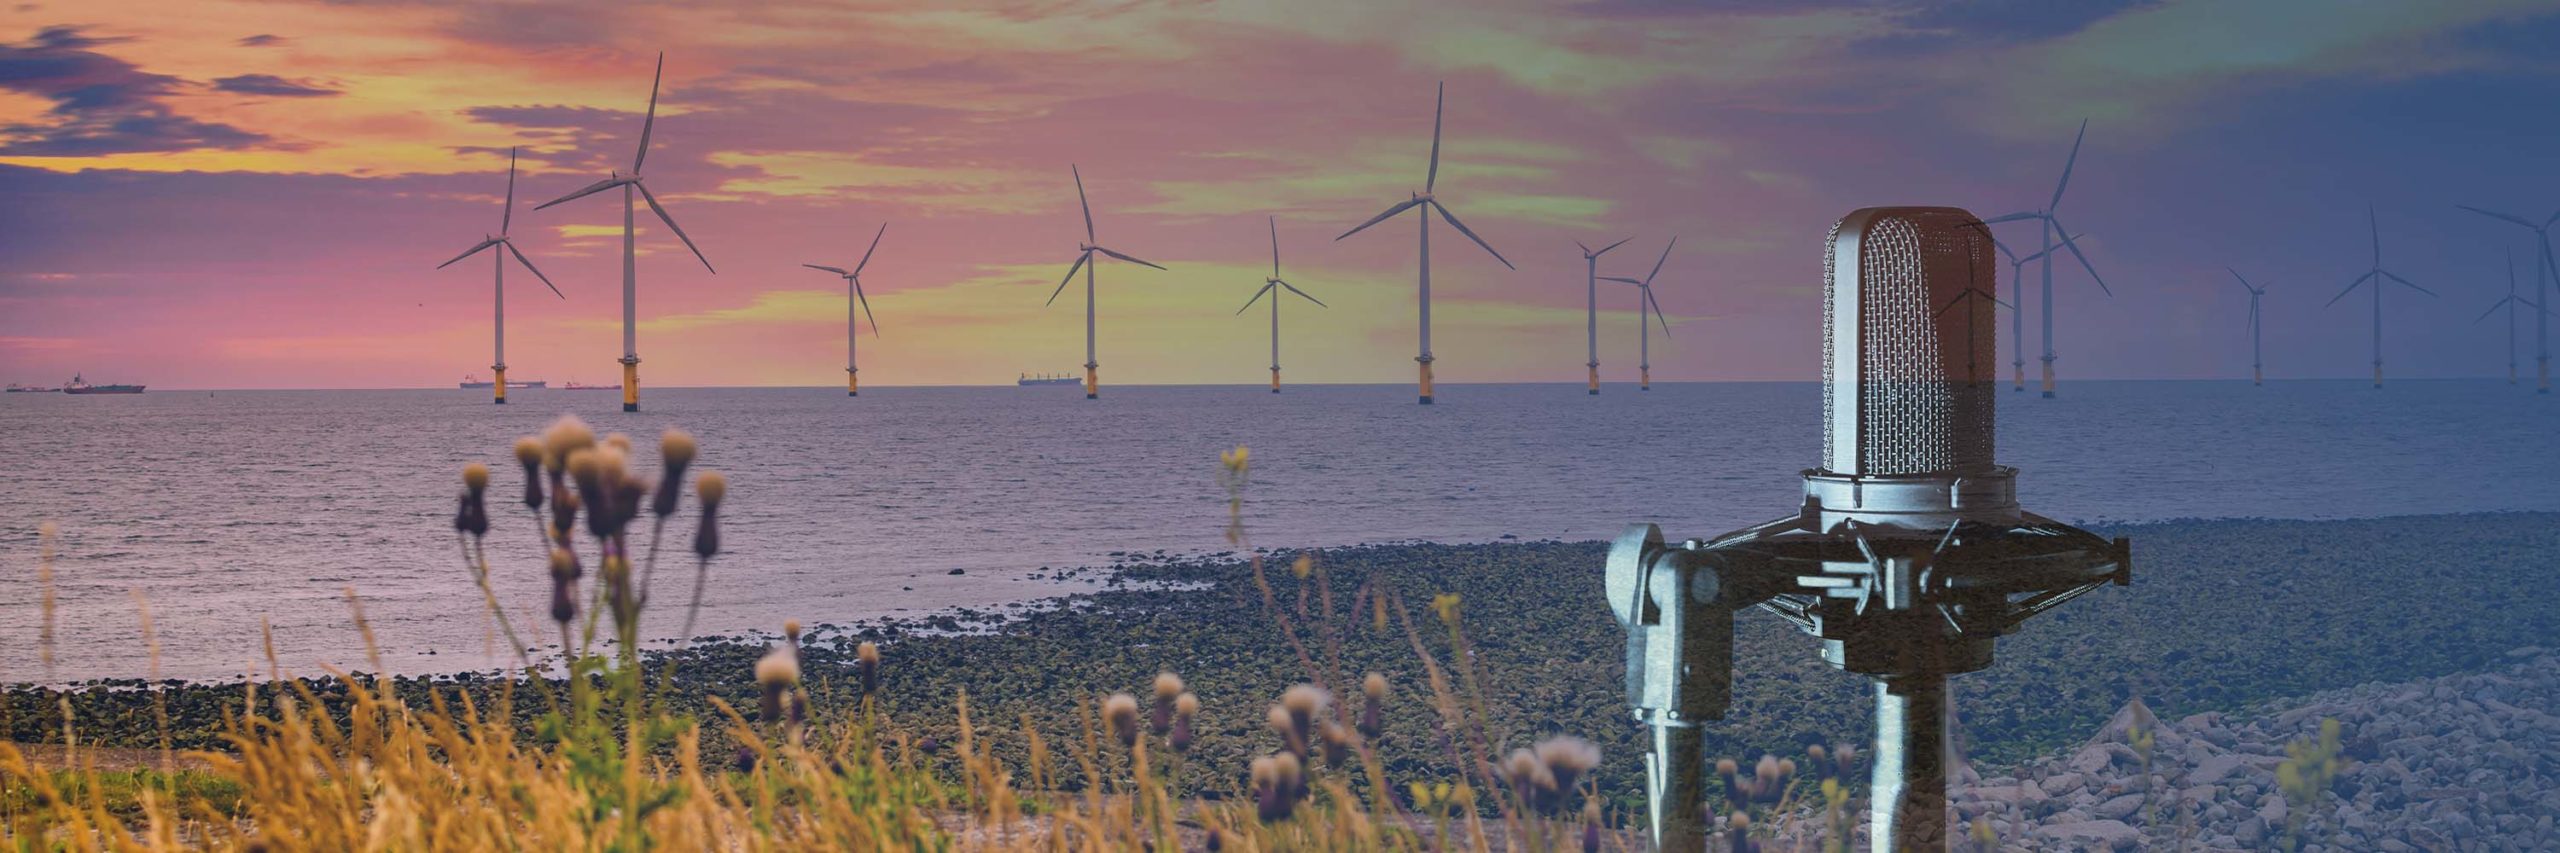 Energy Transition Now Podcast – Episode 24 “Championing UK Offshore Wind”